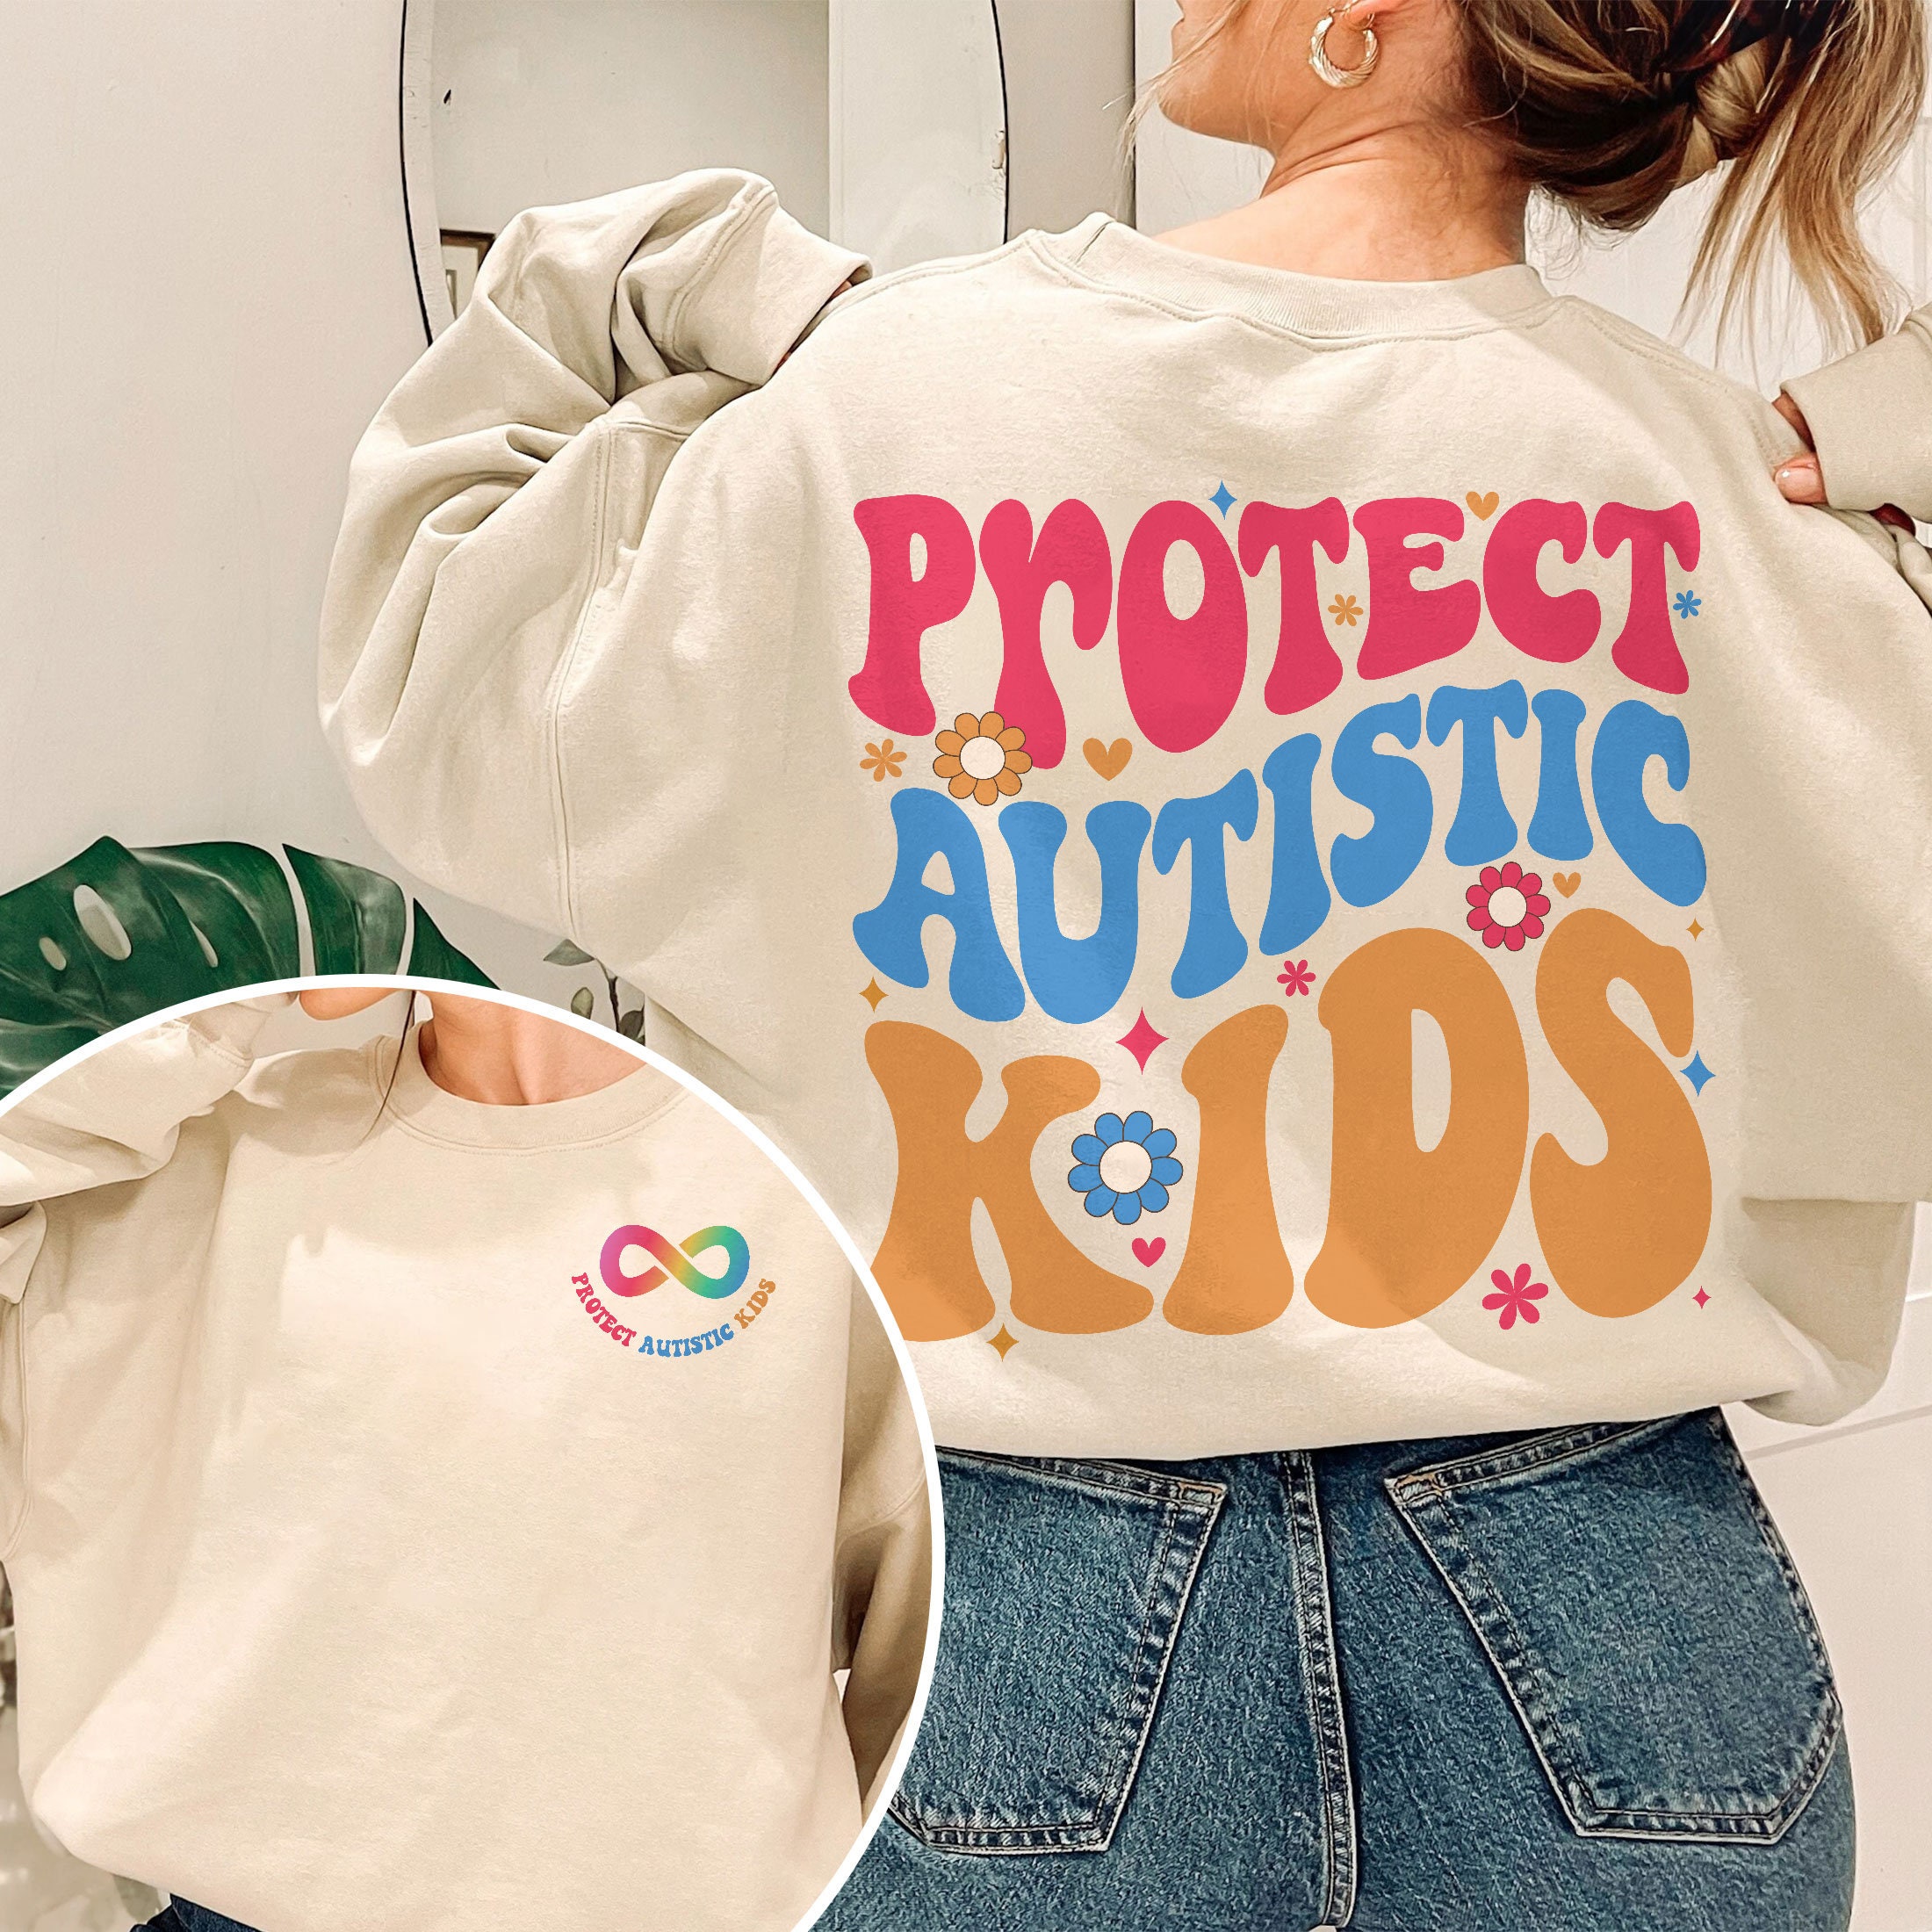 Special Education Autistic Sweatshirt, Protect Autistic Kids